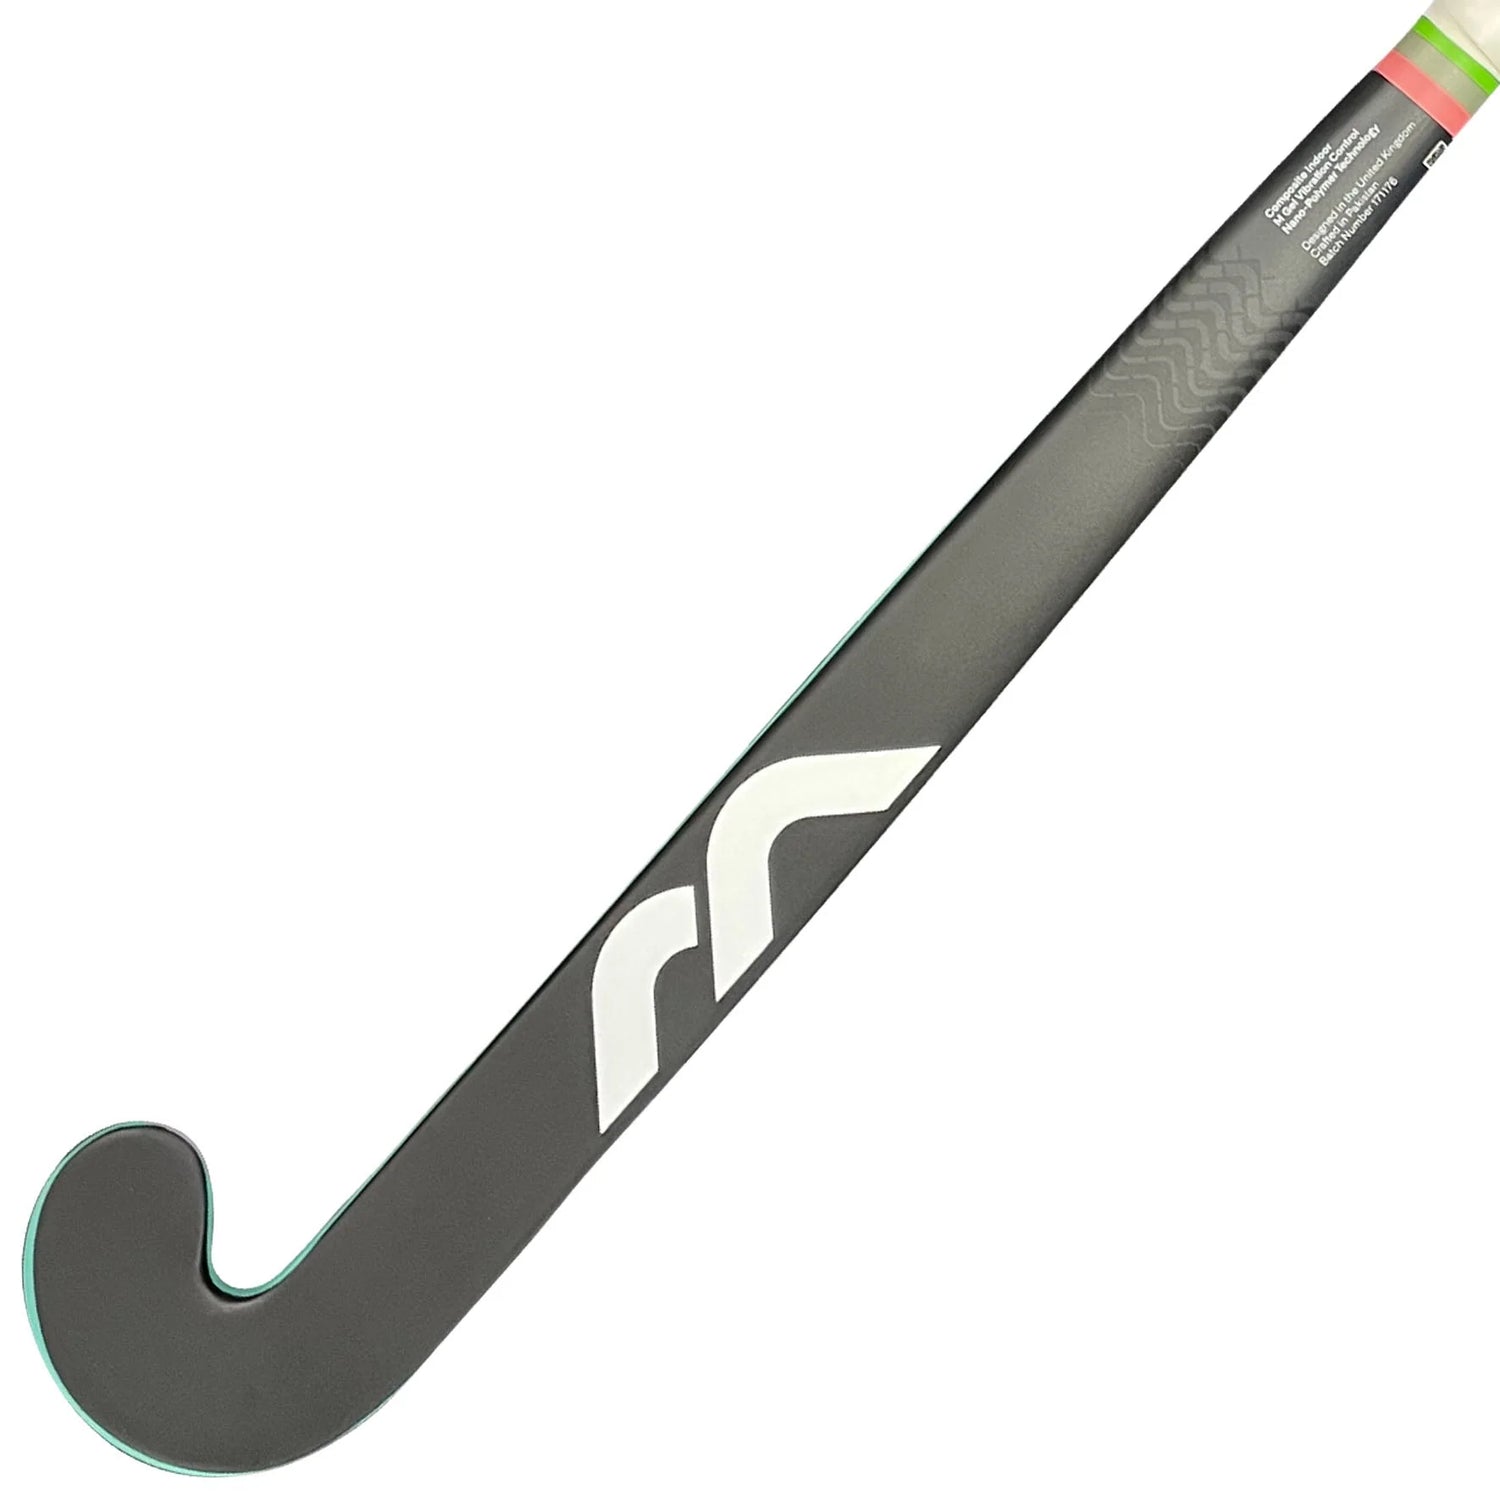 Mercian Genesis CF25 GK Hockey Stick